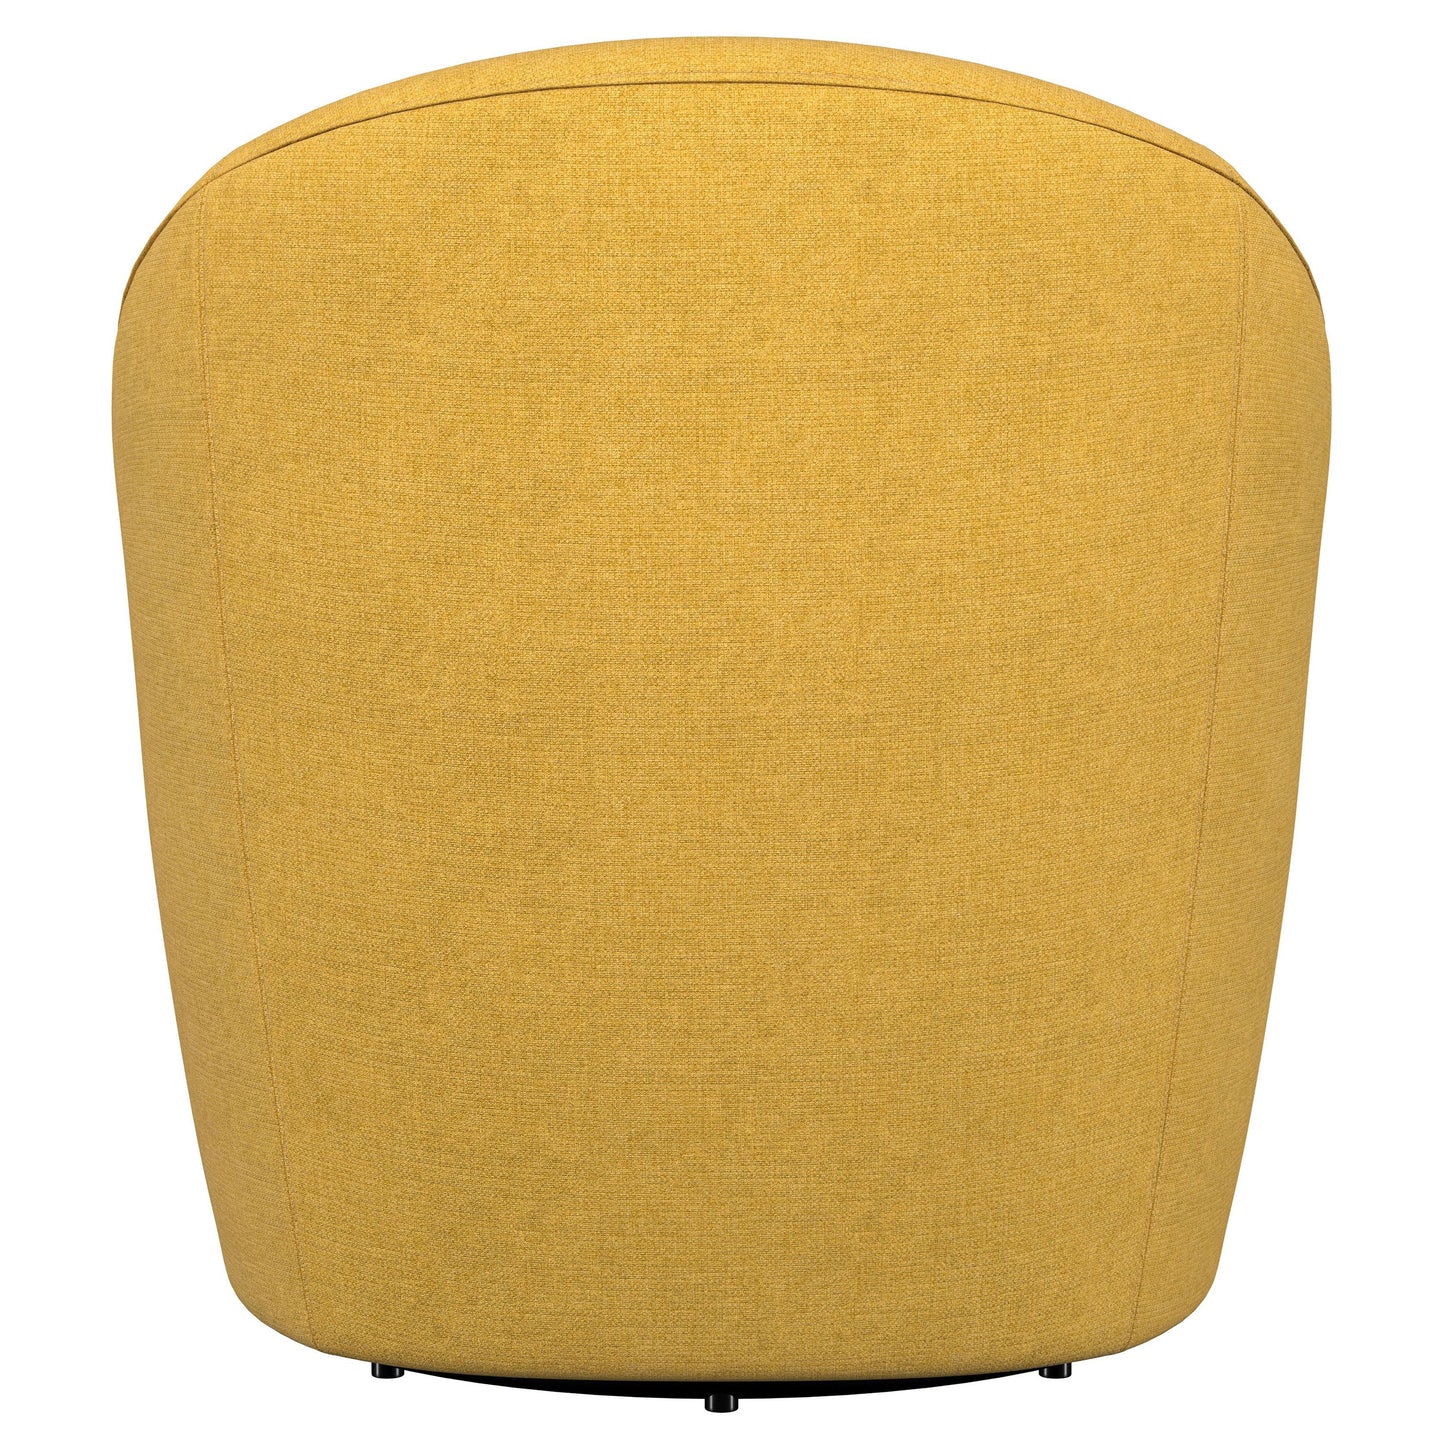 Leon Upholstered Accent Swivel Barrel Chair Mustard Yellow